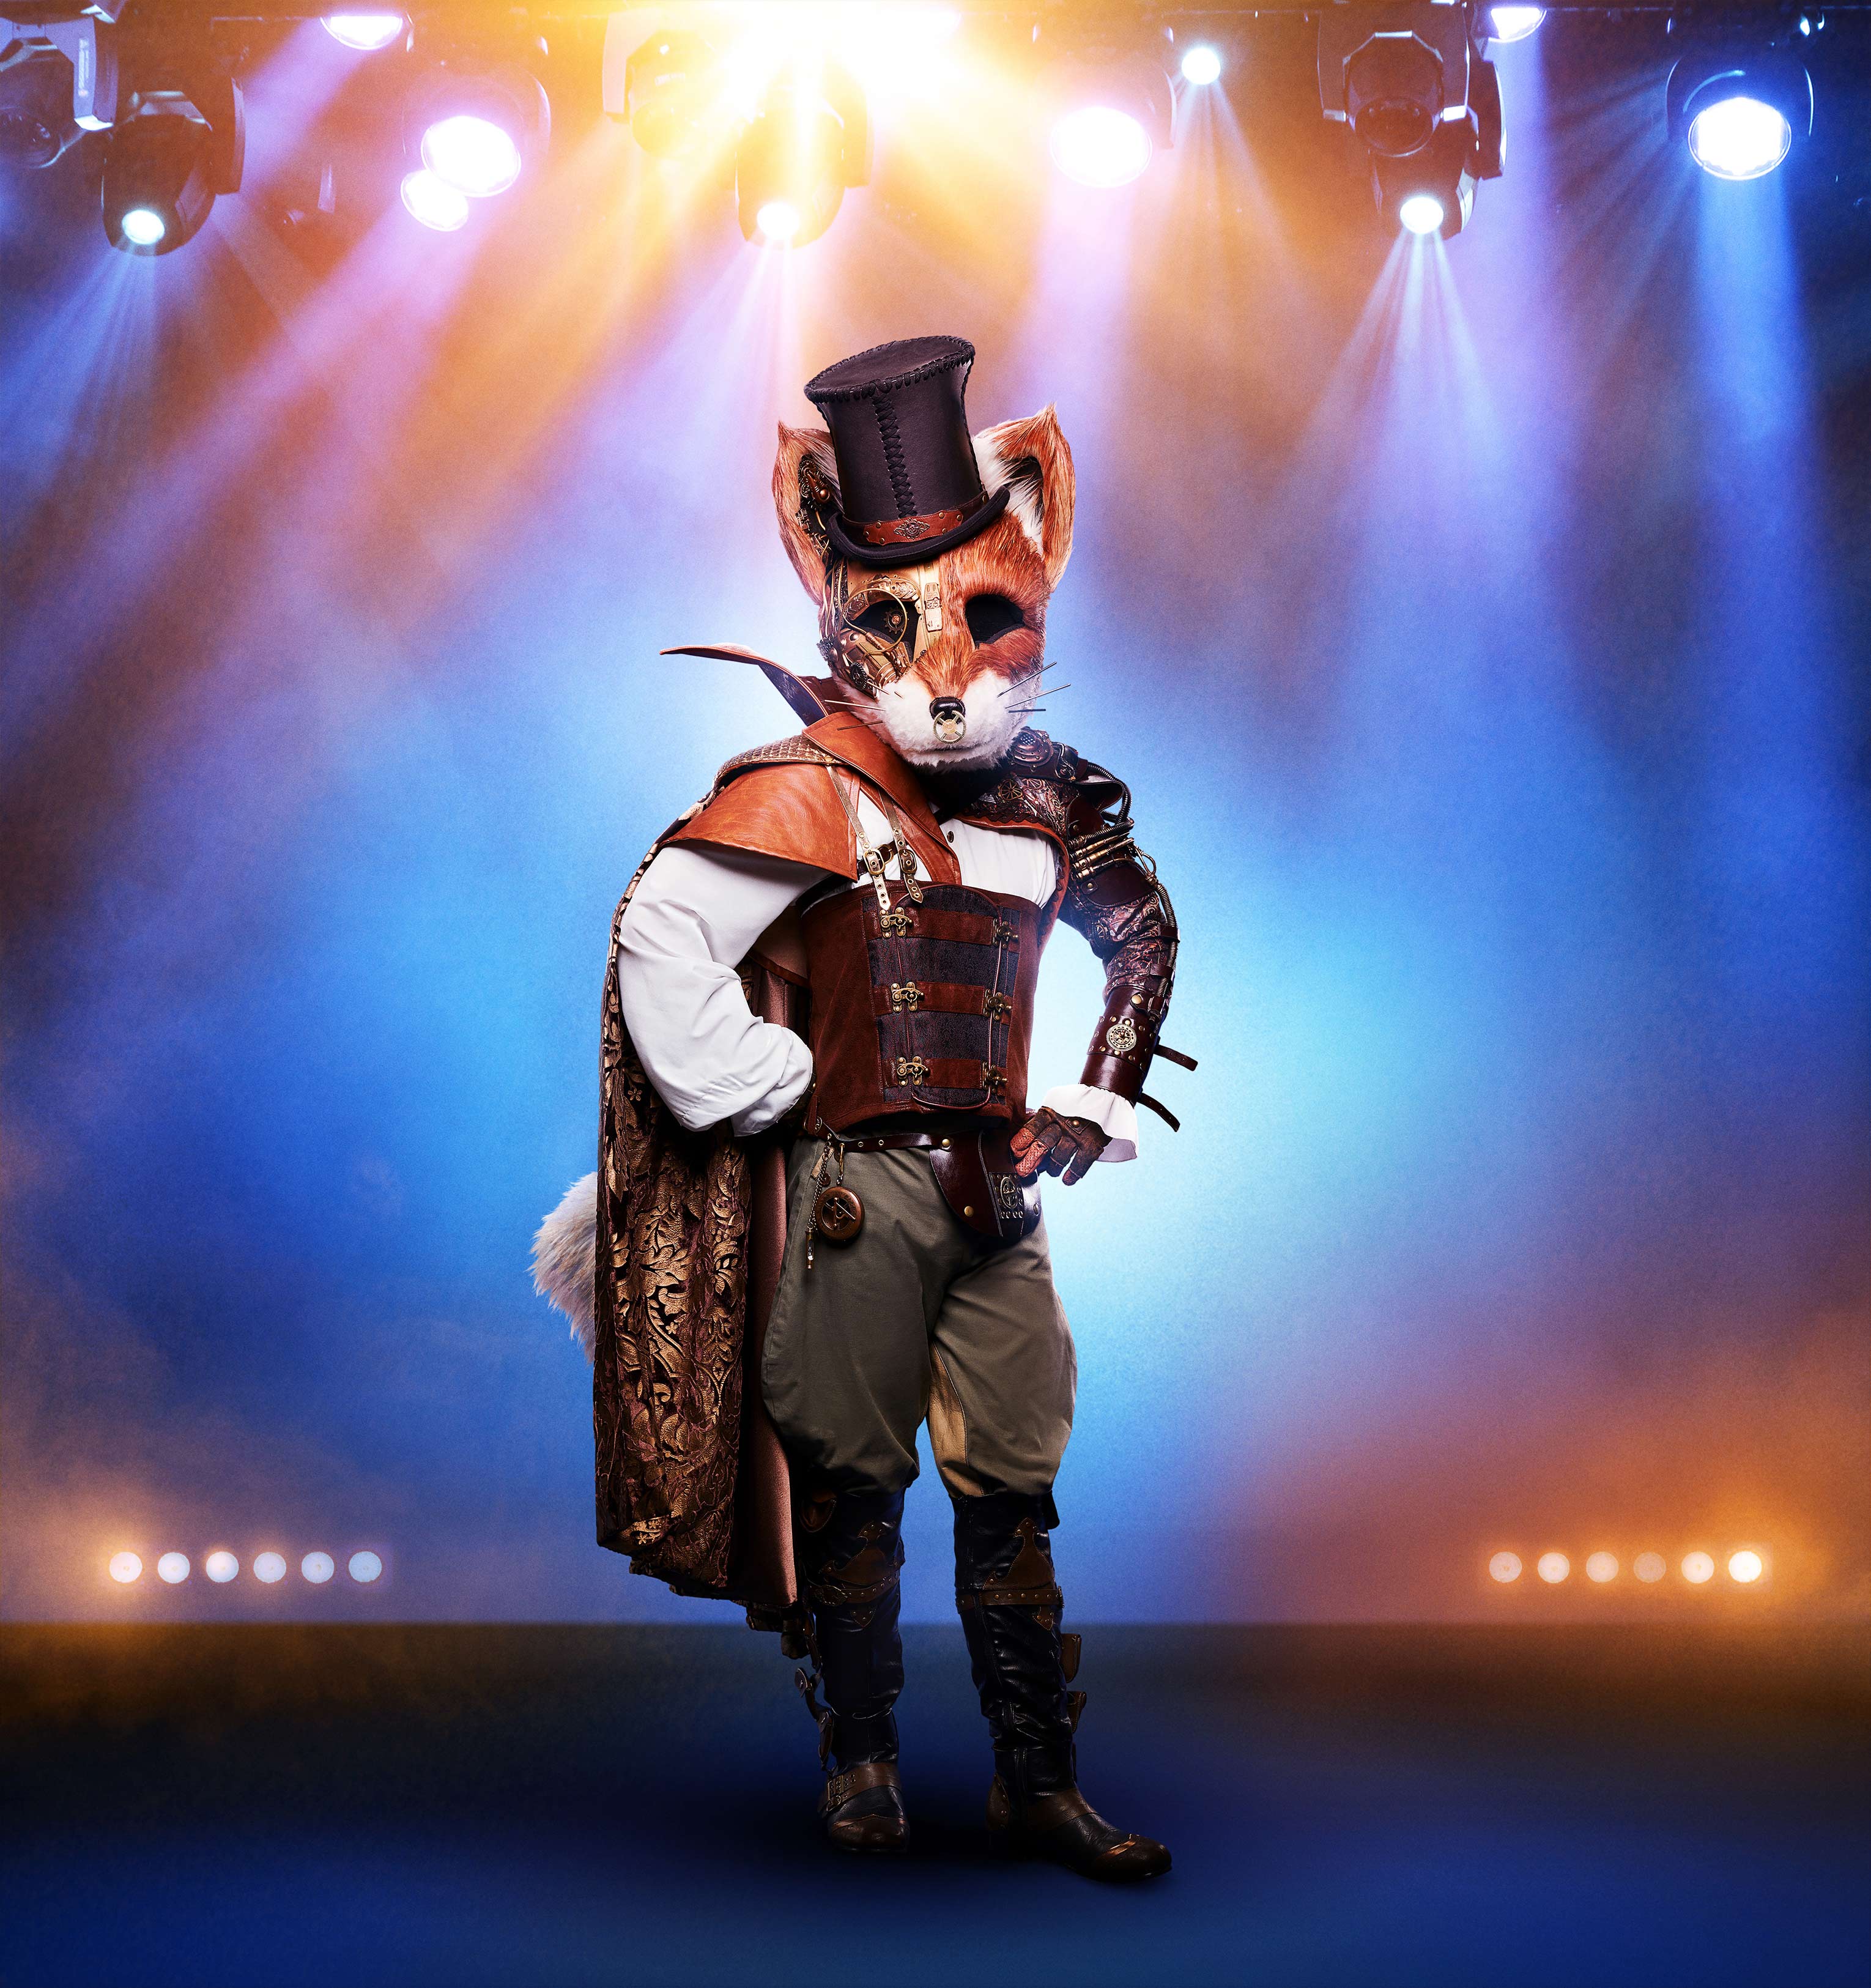 Us fox. Шоу "the masked Singer" -2020. The masked Singer Fox.